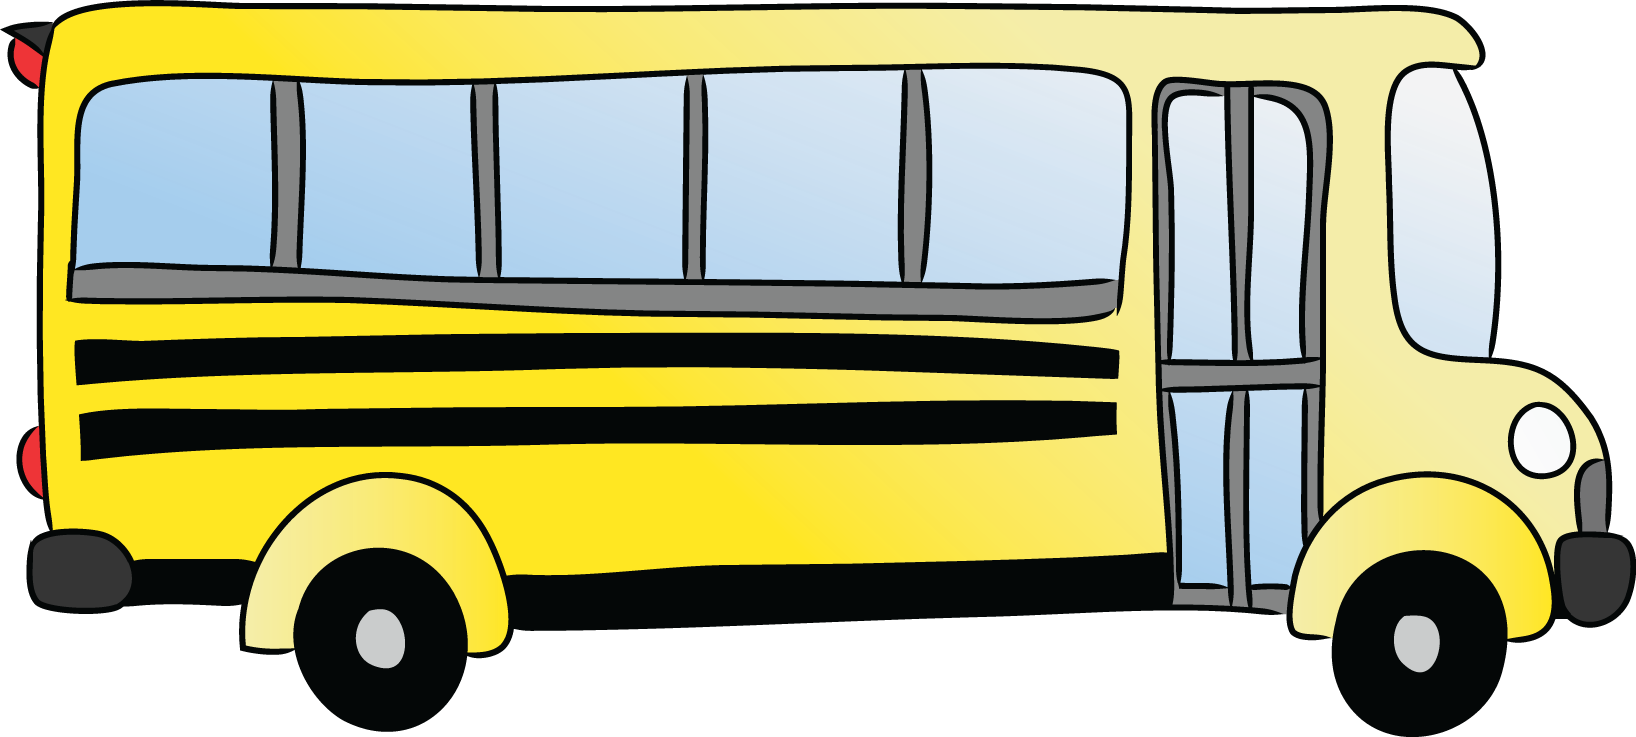 School bus clip art. Free school bus clipart